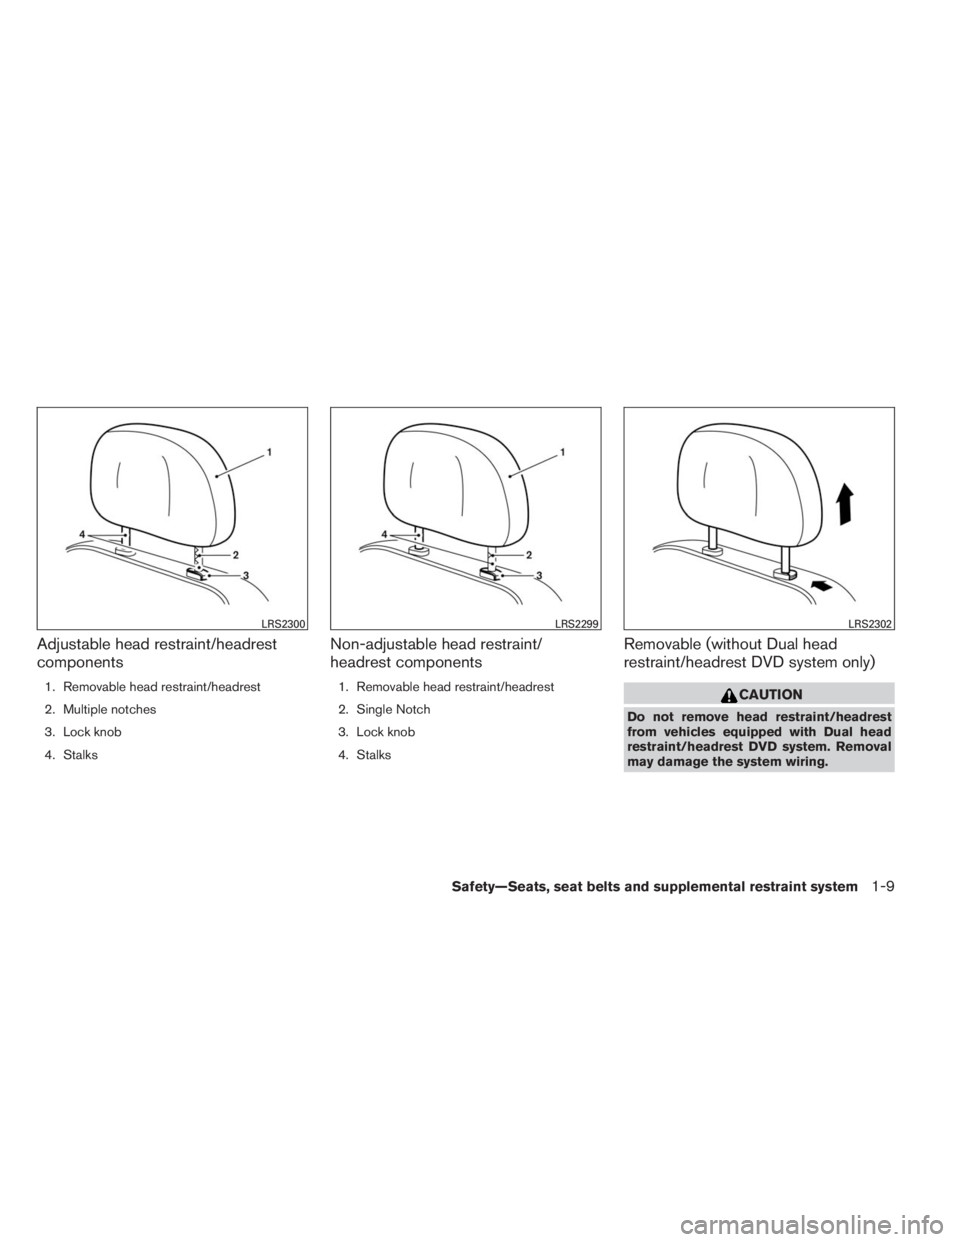 INFINITI QX60 2014 User Guide Adjustable head restraint/headrest
components
1. Removable head restraint/headrest
2. Multiple notches
3. Lock knob
4. Stalks
Non-adjustable head restraint/
headrest components
1. Removable head restr